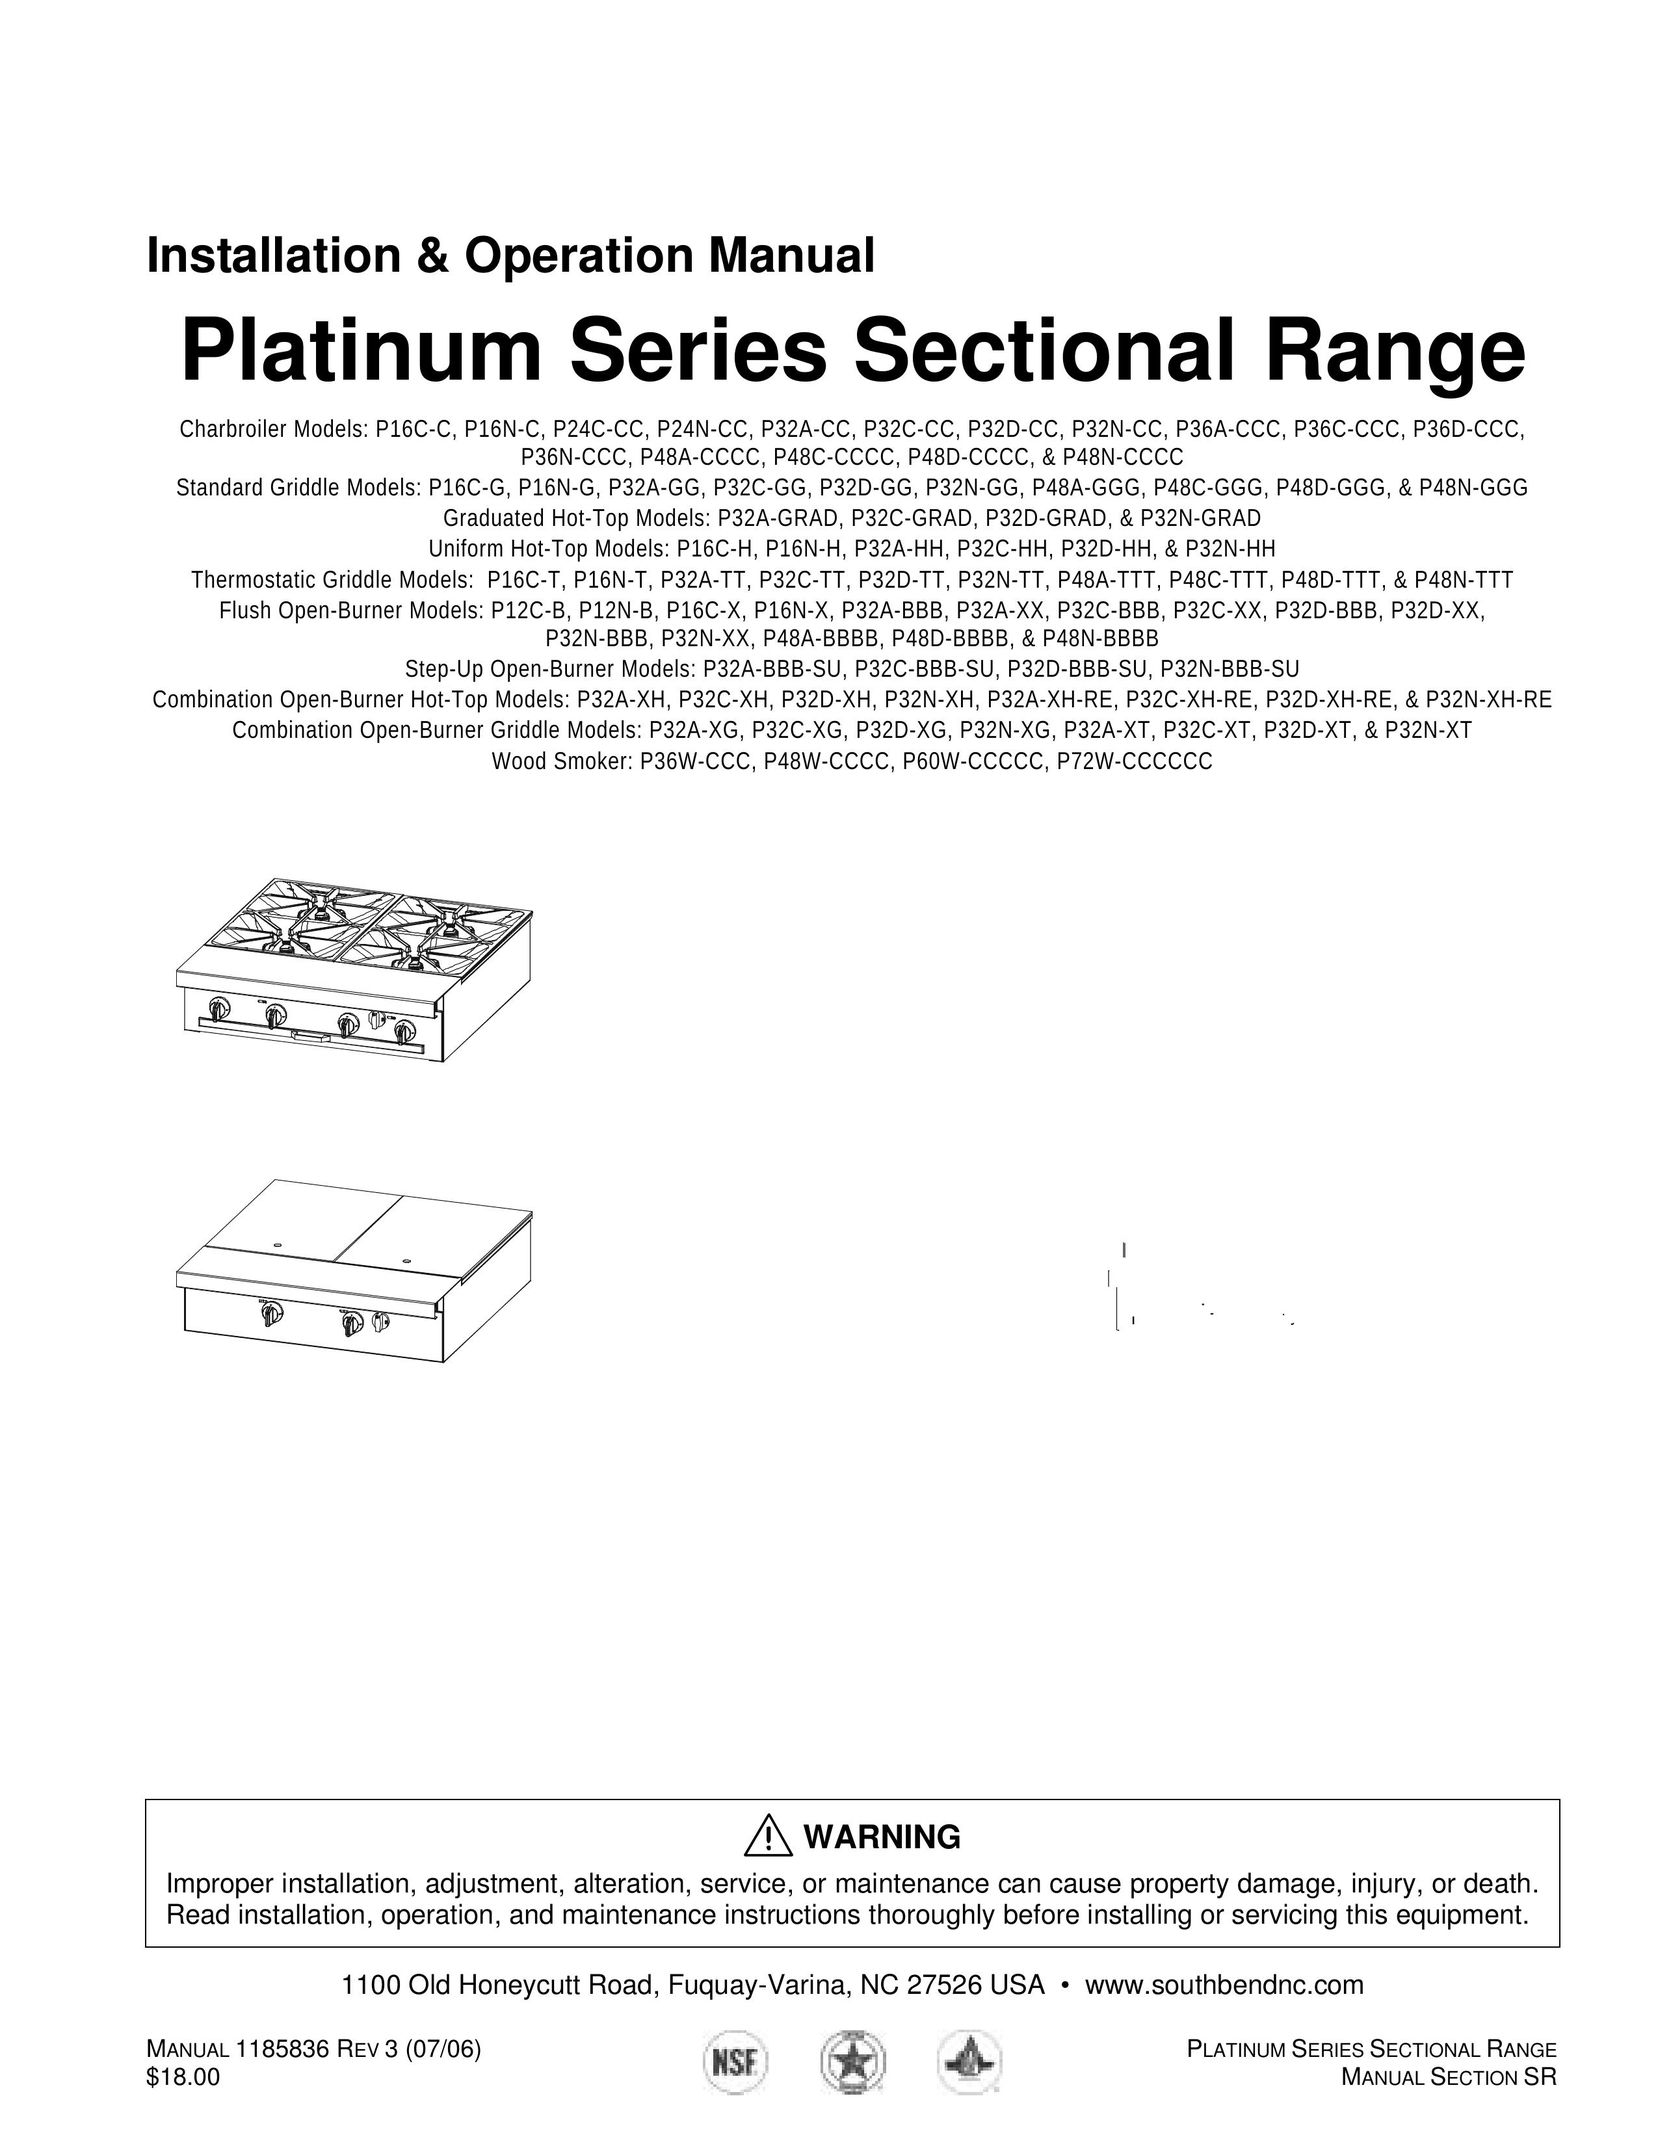 Southbend P16C-T Range User Manual